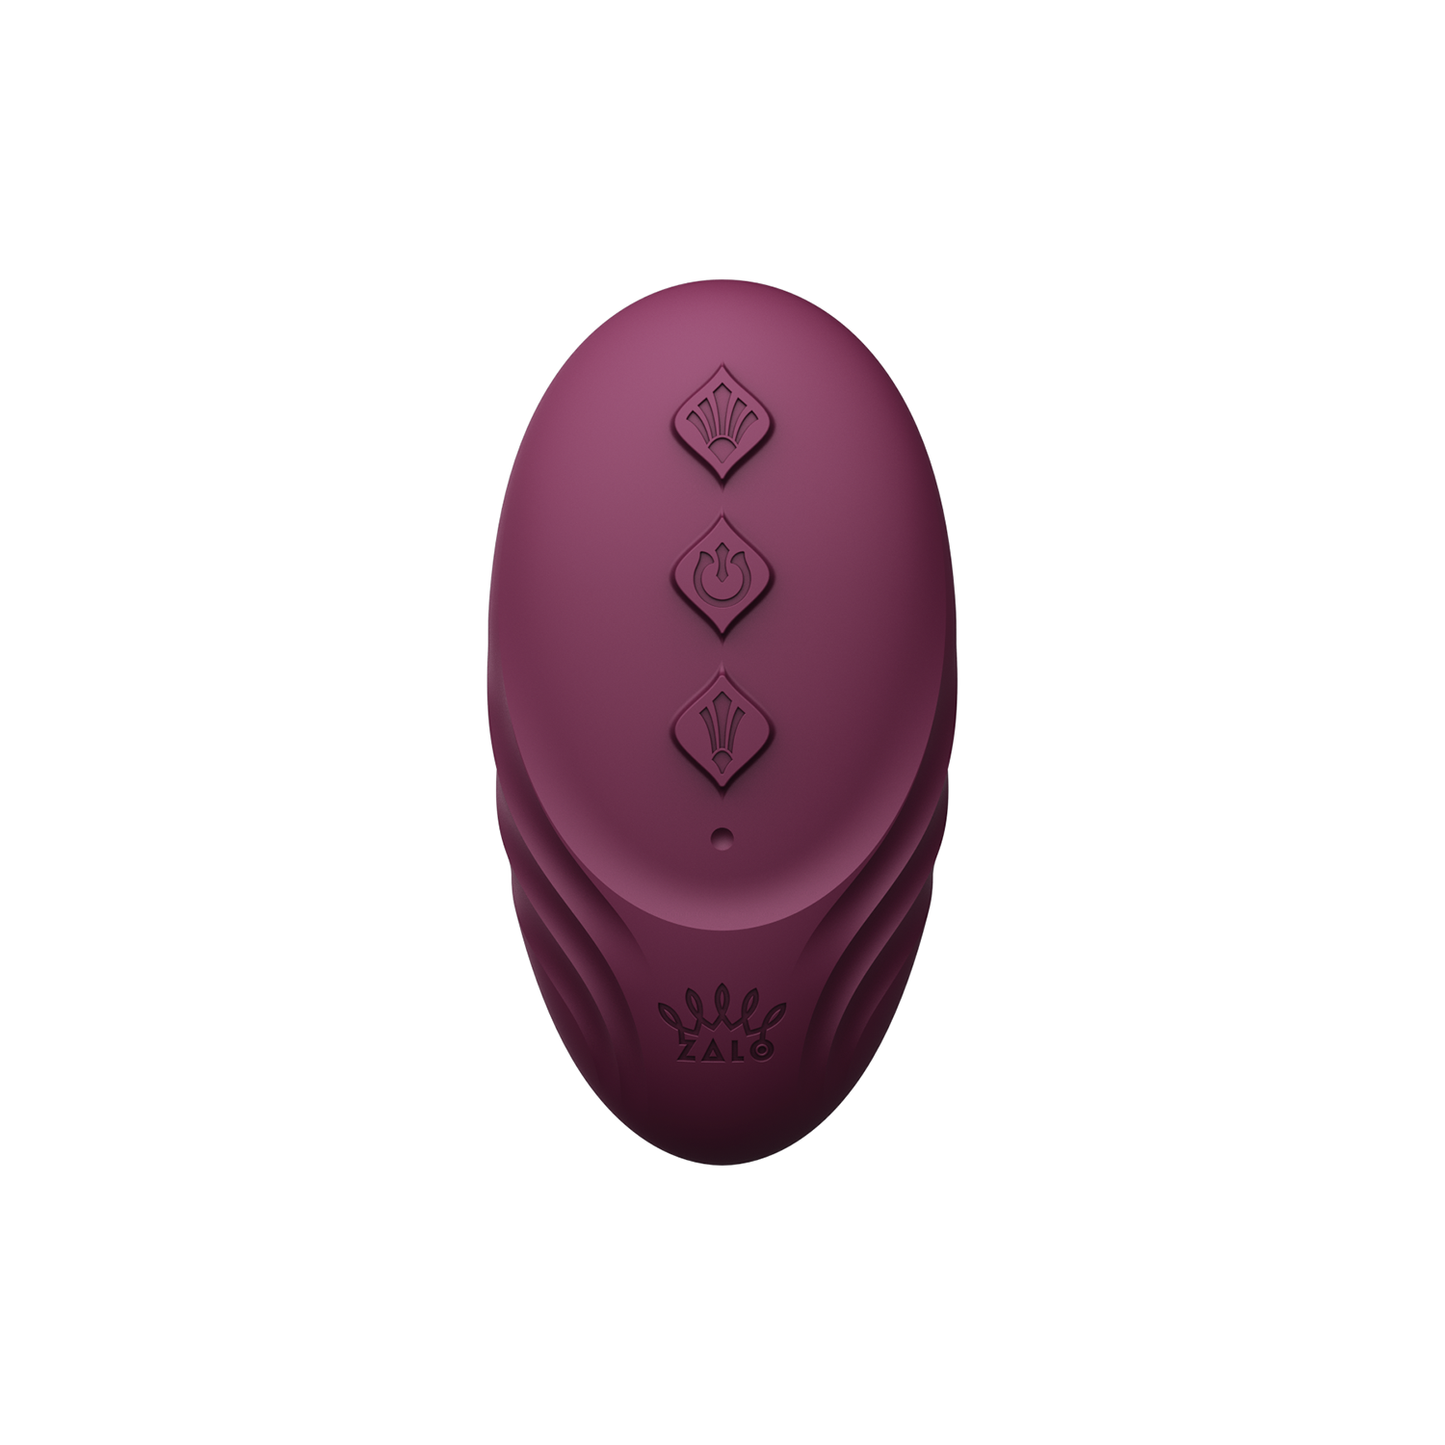 Aya Remote and App Control Vibrator